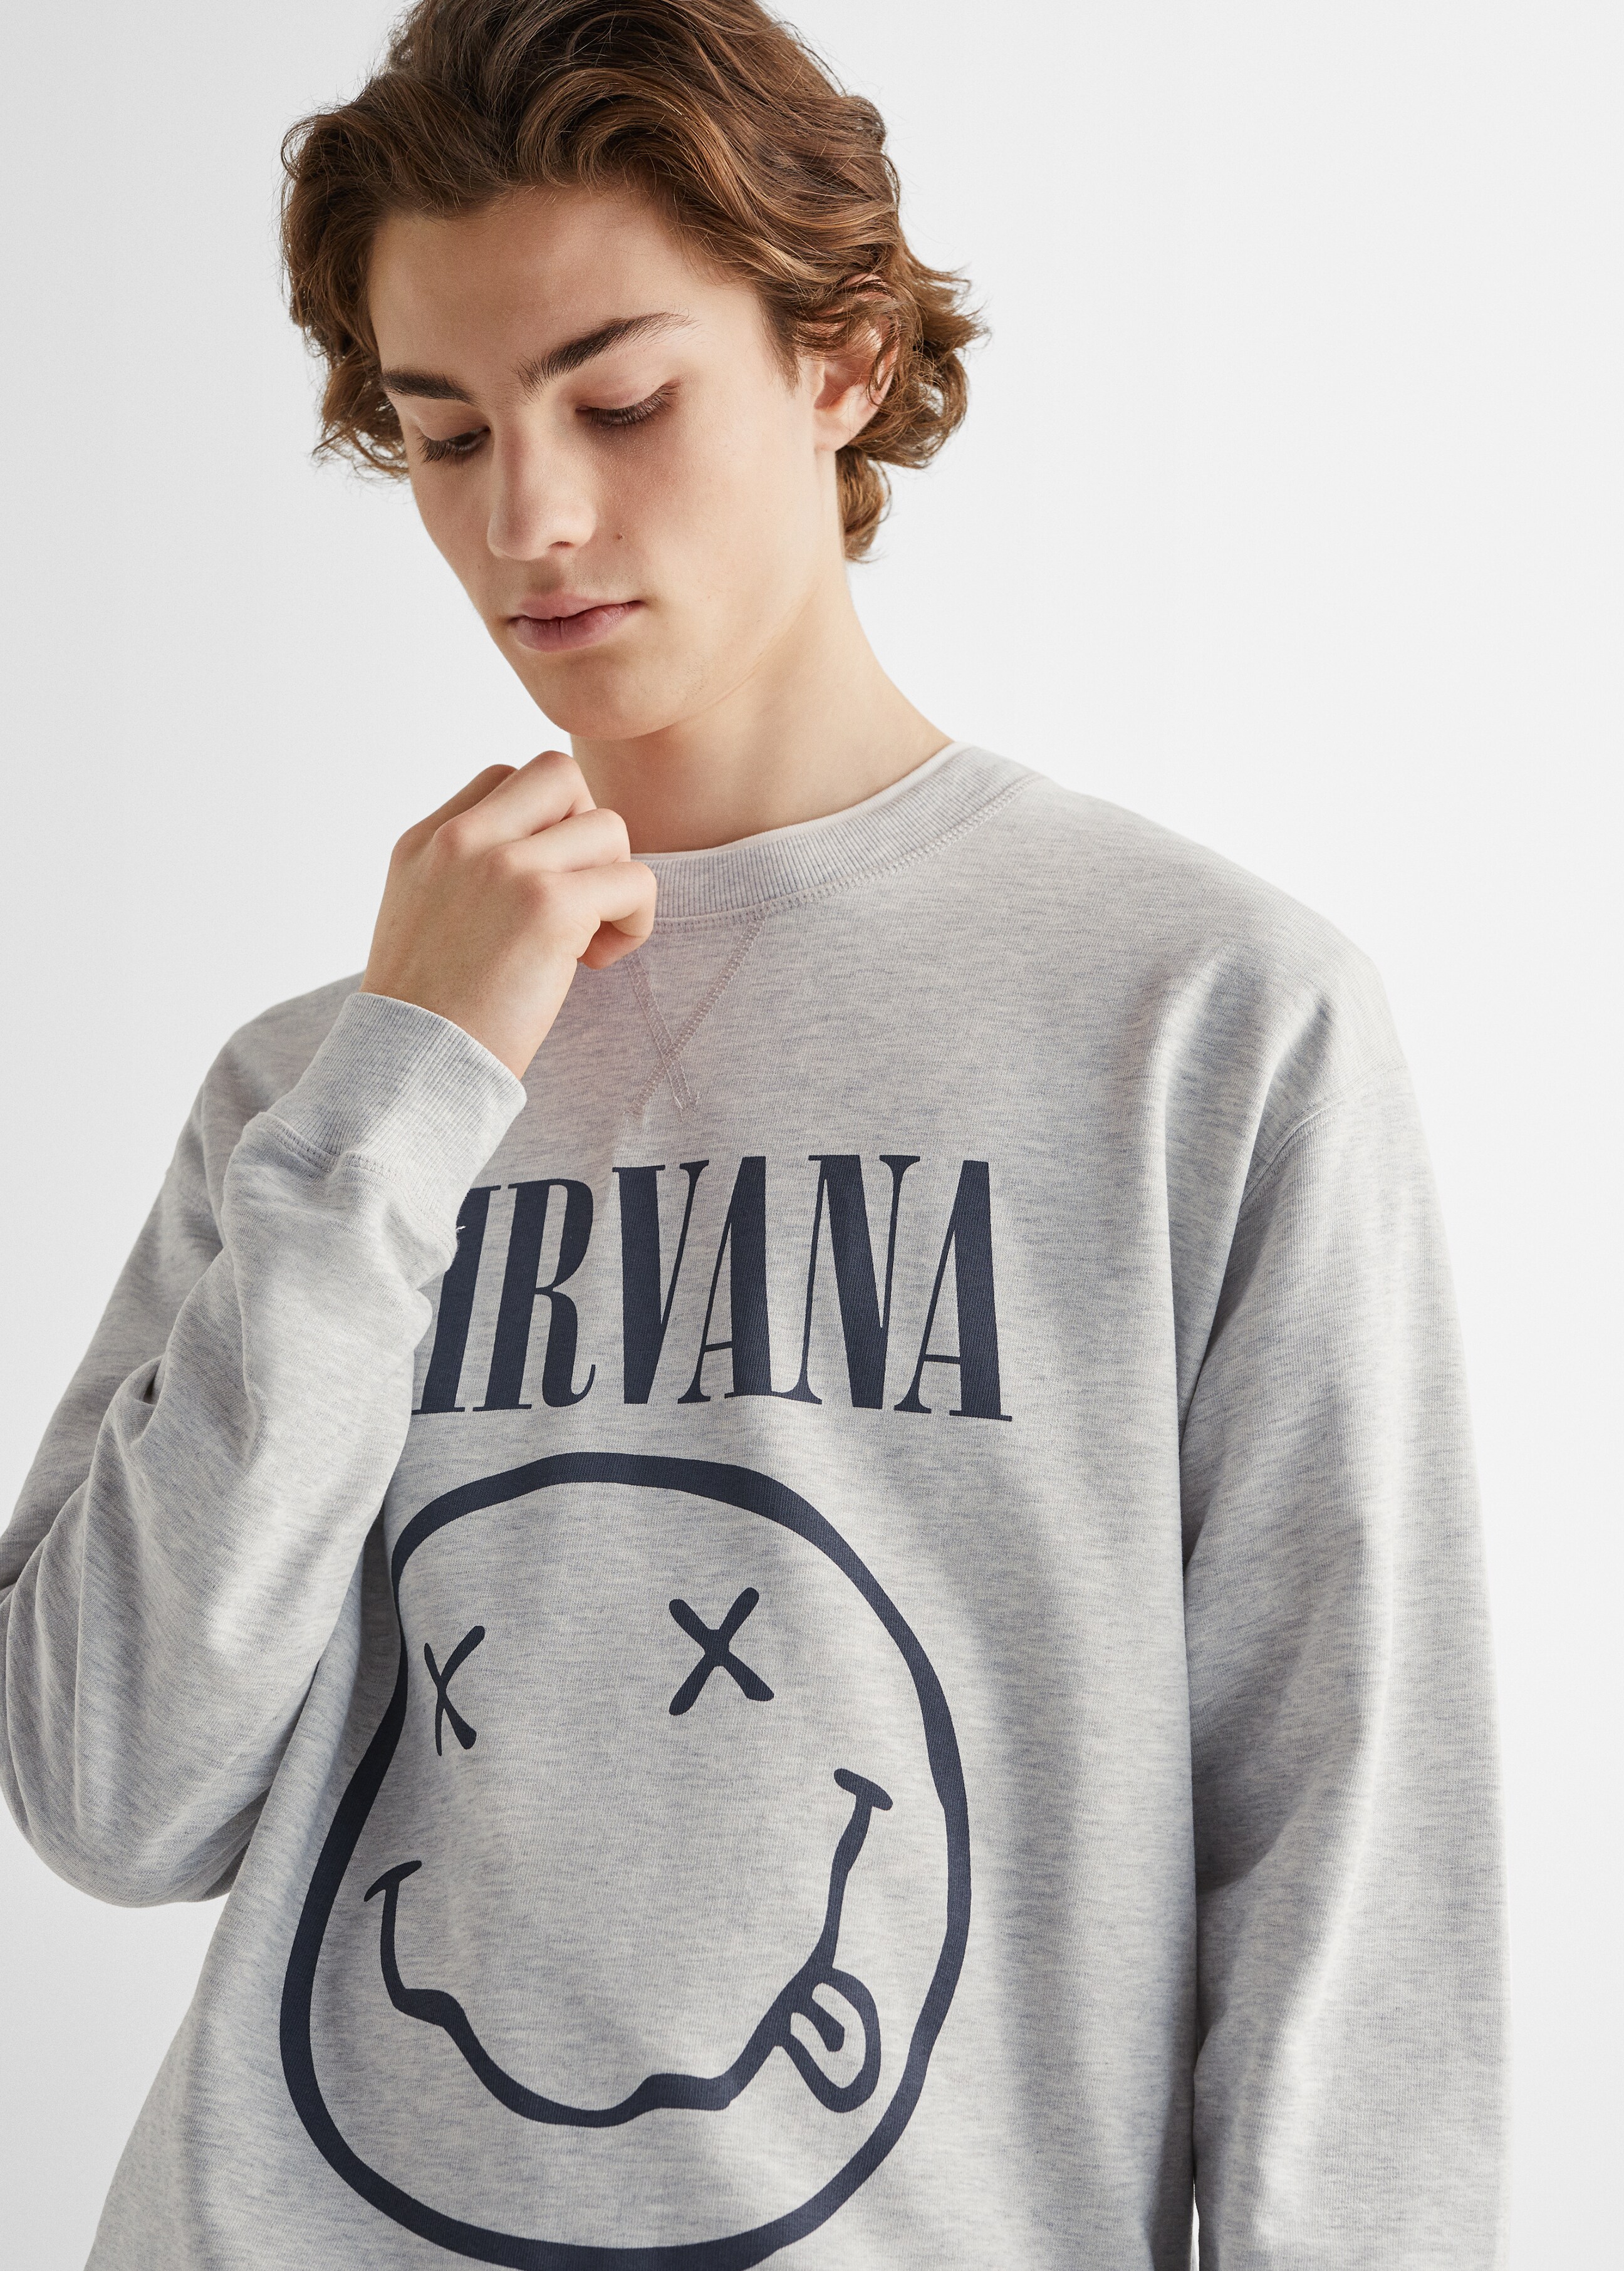 Nirvana sweatshirt - Details of the article 1